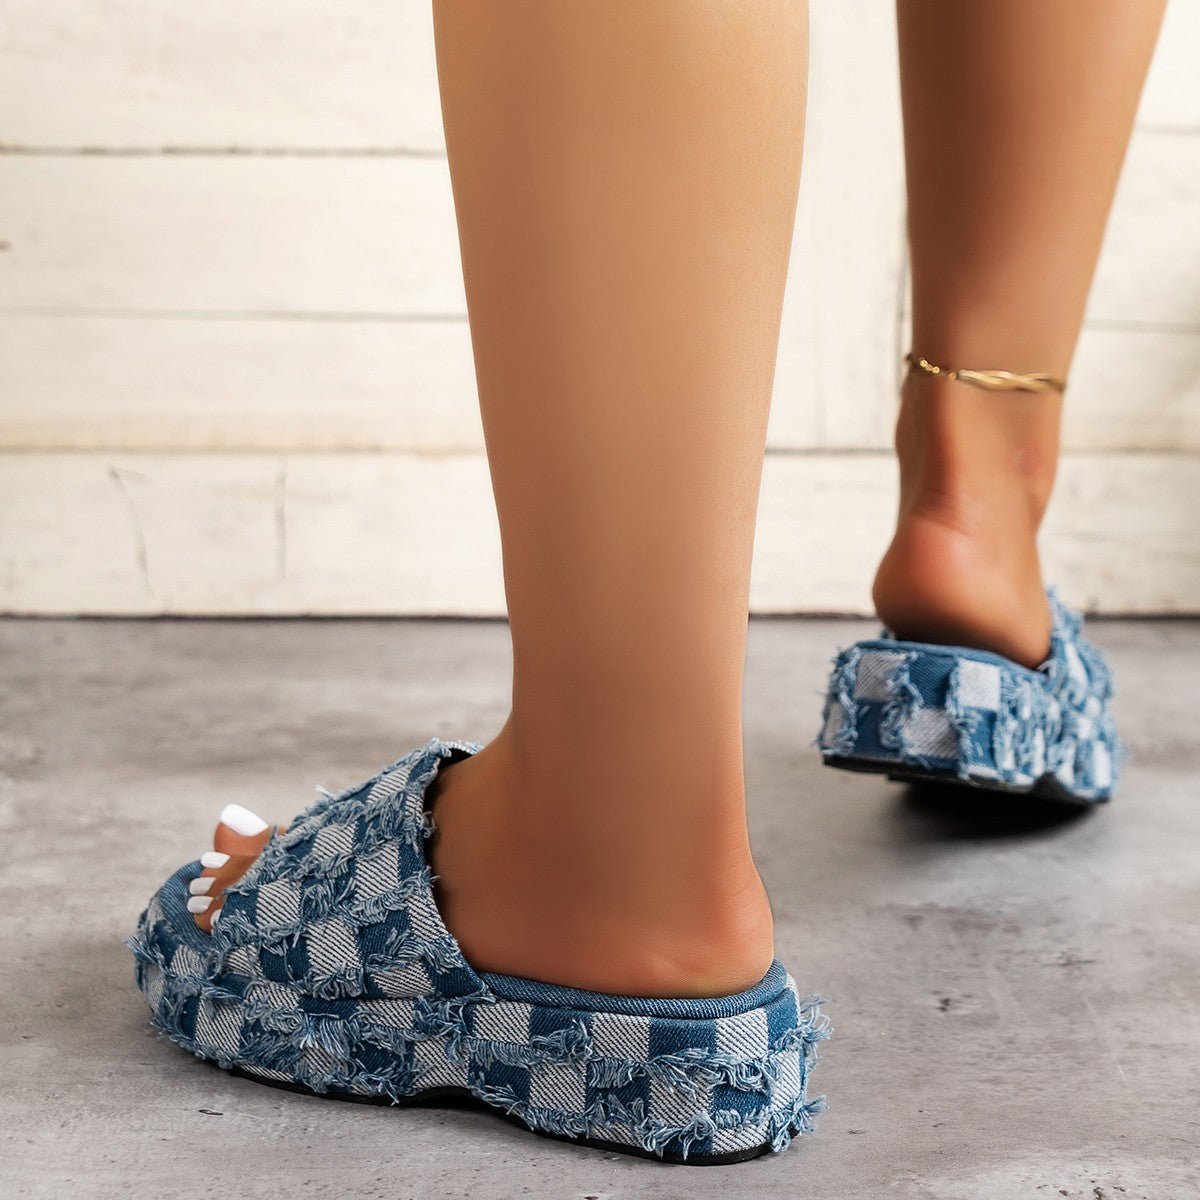 Plaid PU Leather Platform Sandals - OMG! Rose